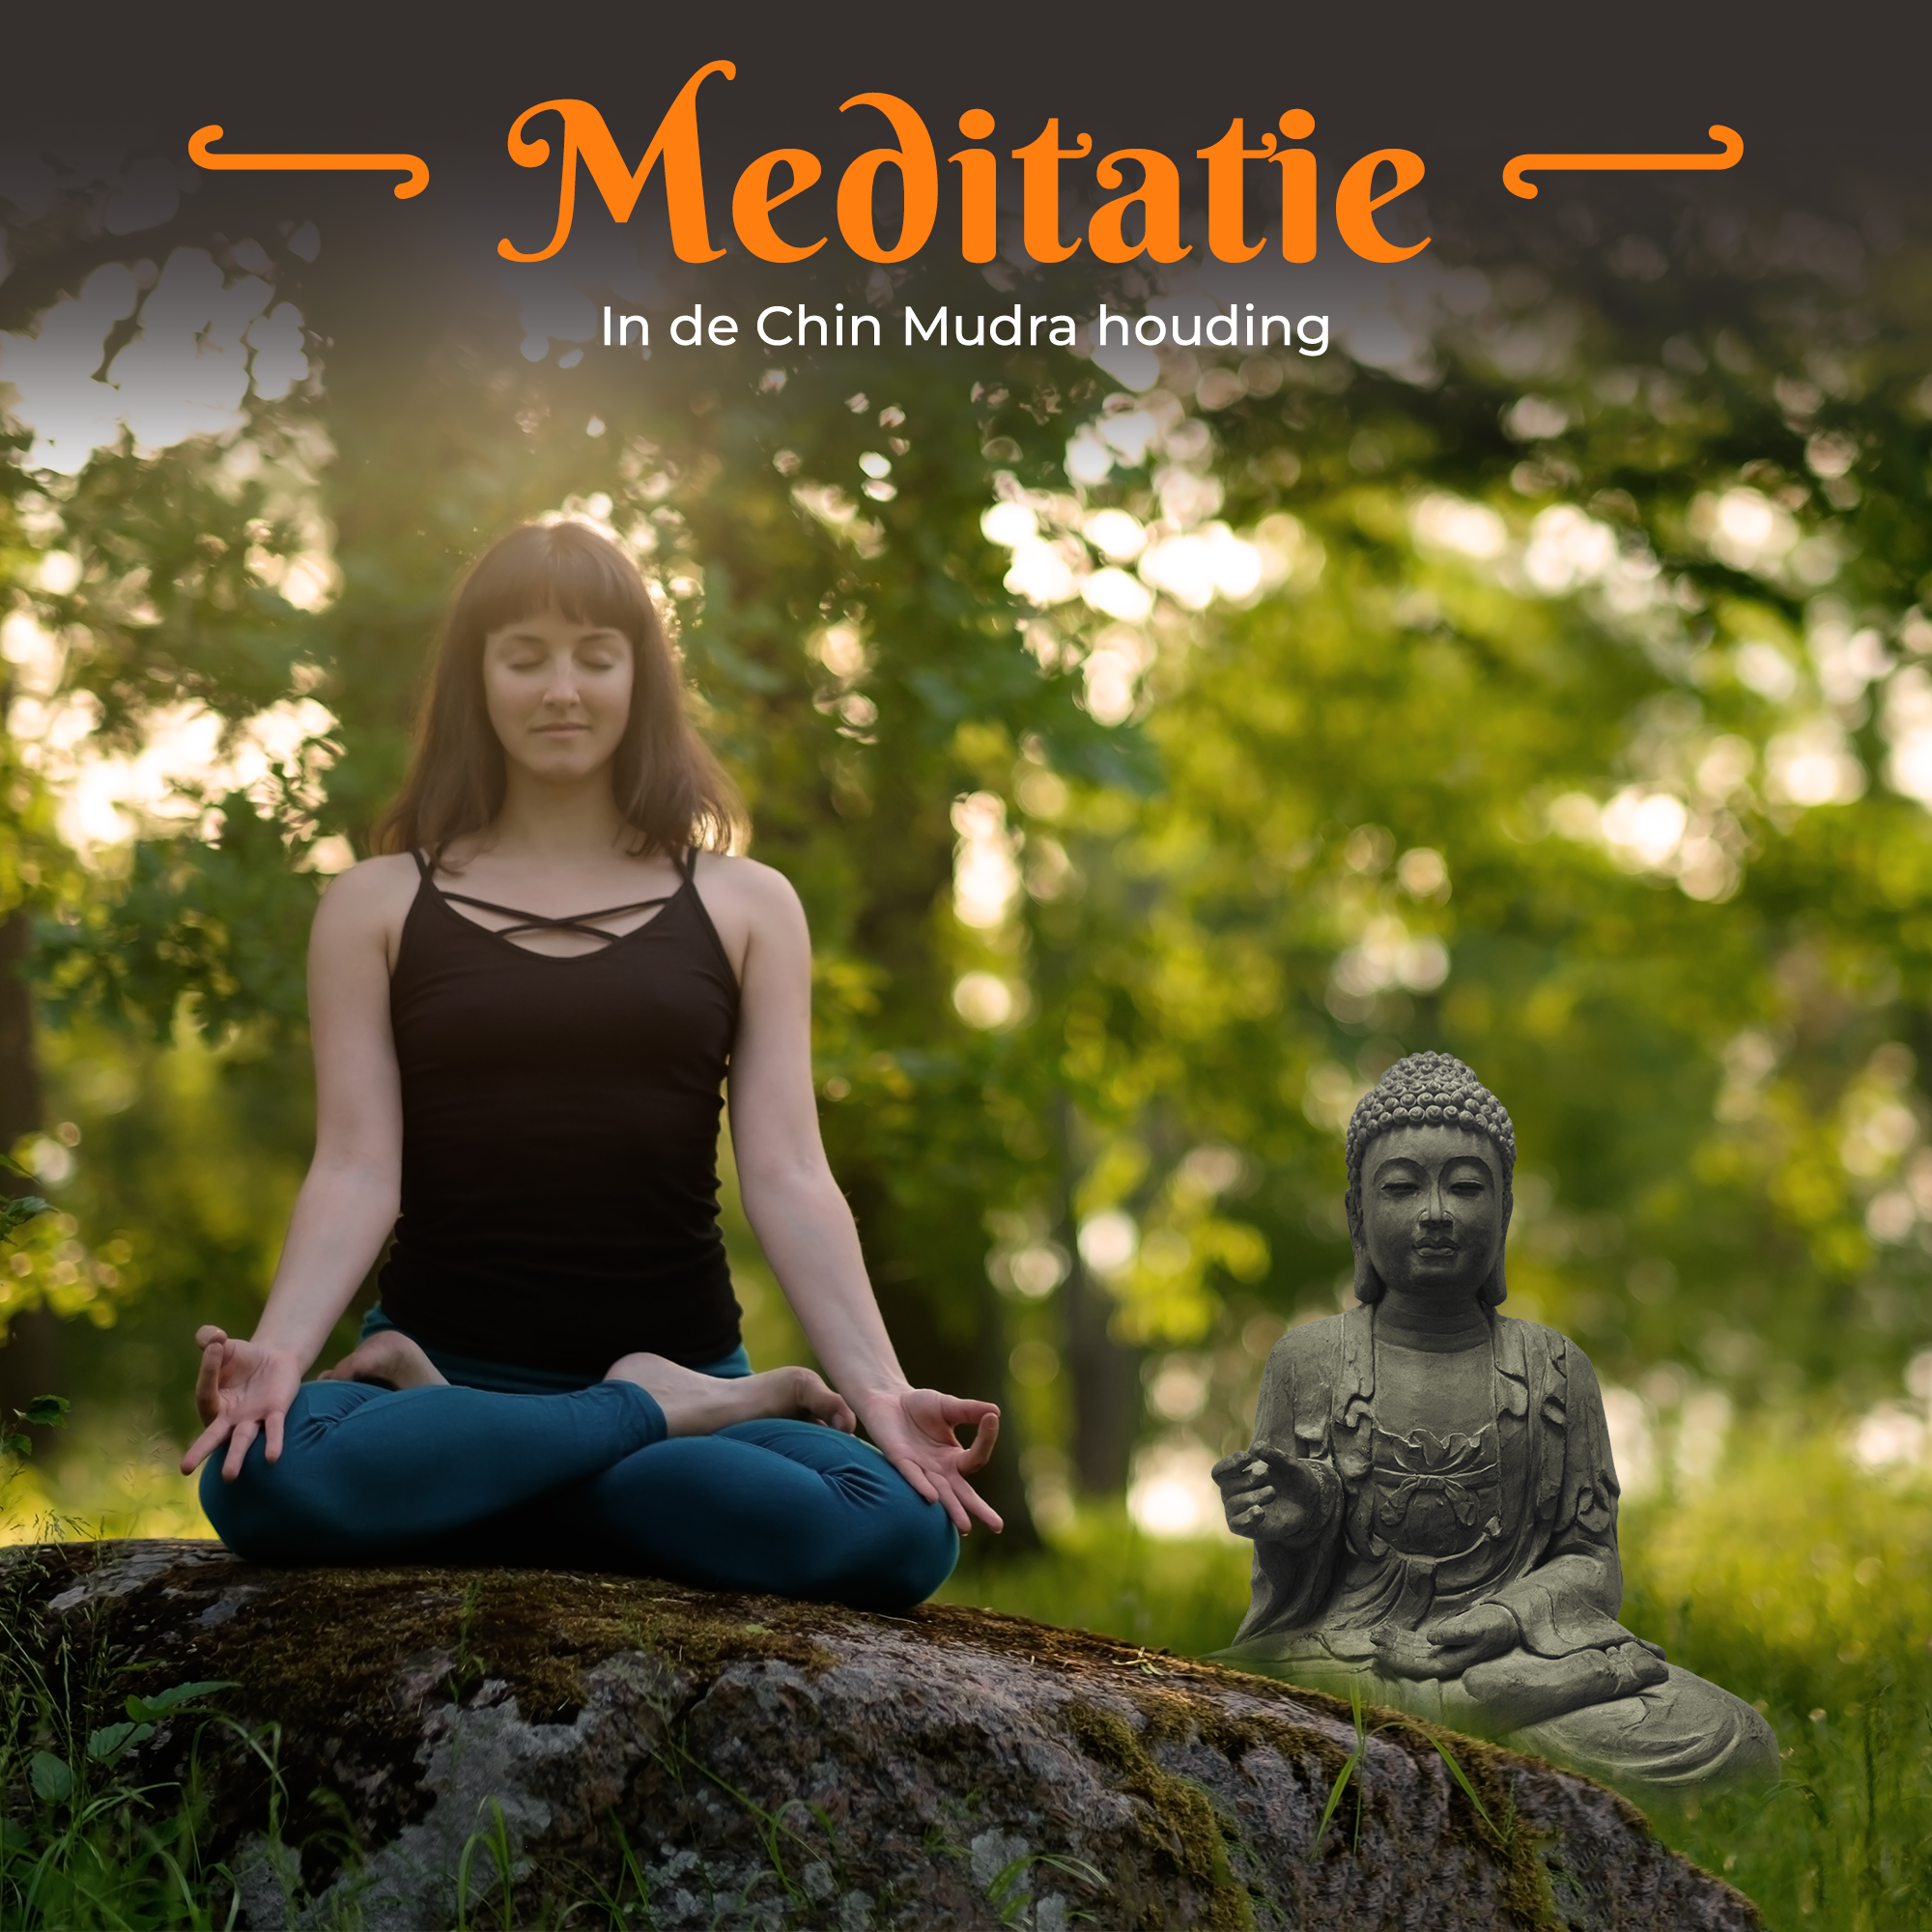 Lot of 4 Meditation Yoga Pose Statue Figurine Ceramic Yoga Figure Set Decor  - Pa | eBay